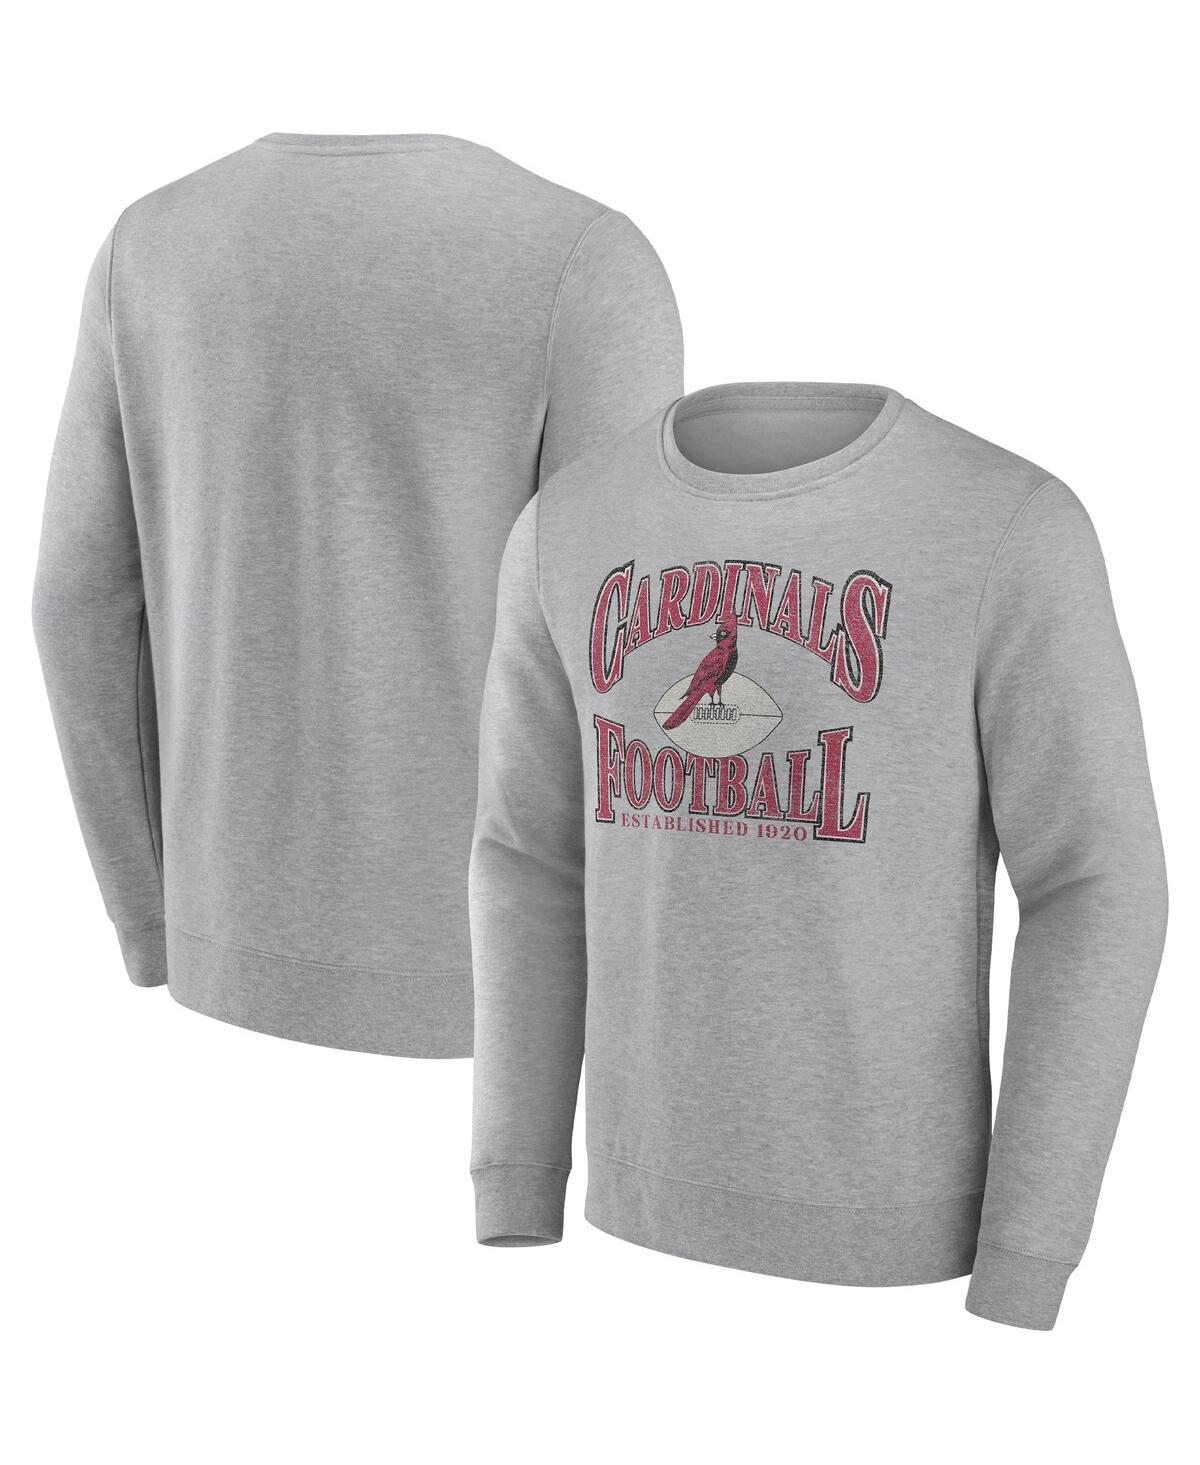 Shop Fanatics Men's  Heathered Charcoal Arizona Cardinals Playability Pullover Sweatshirt